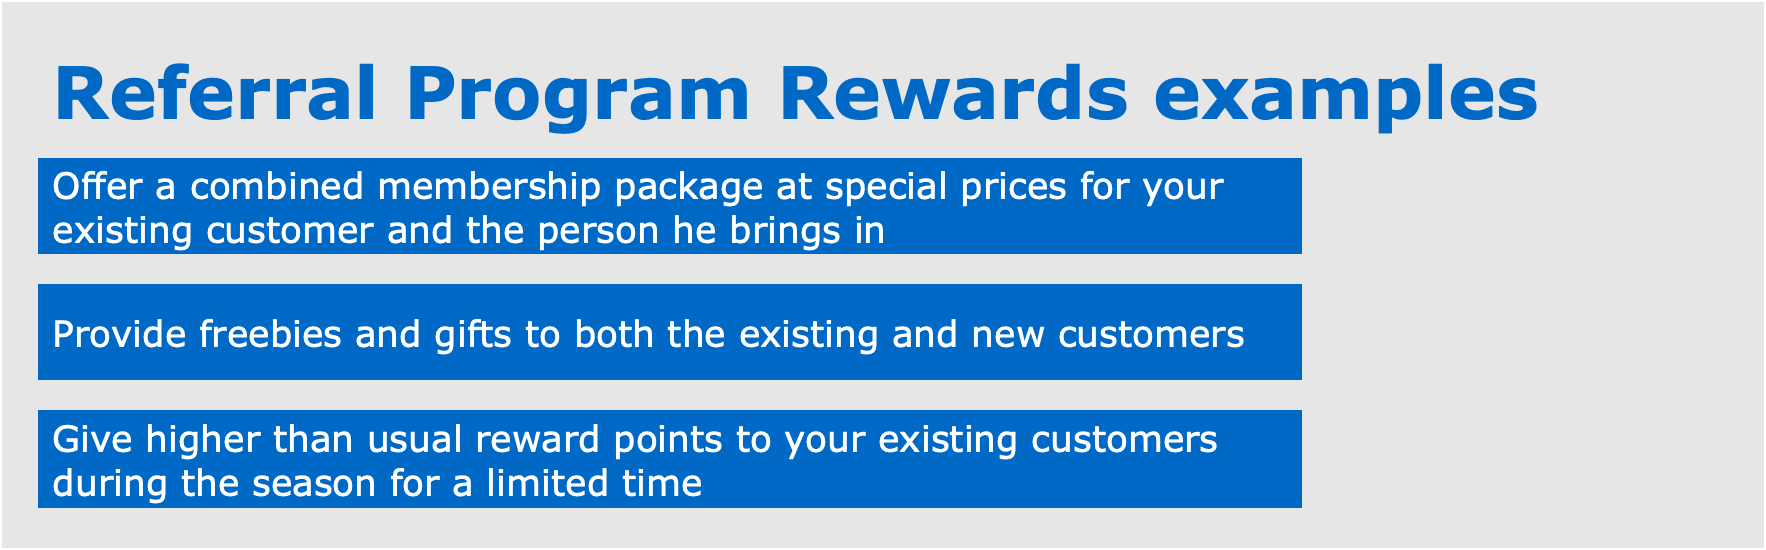 Referral Program Rewards Examples